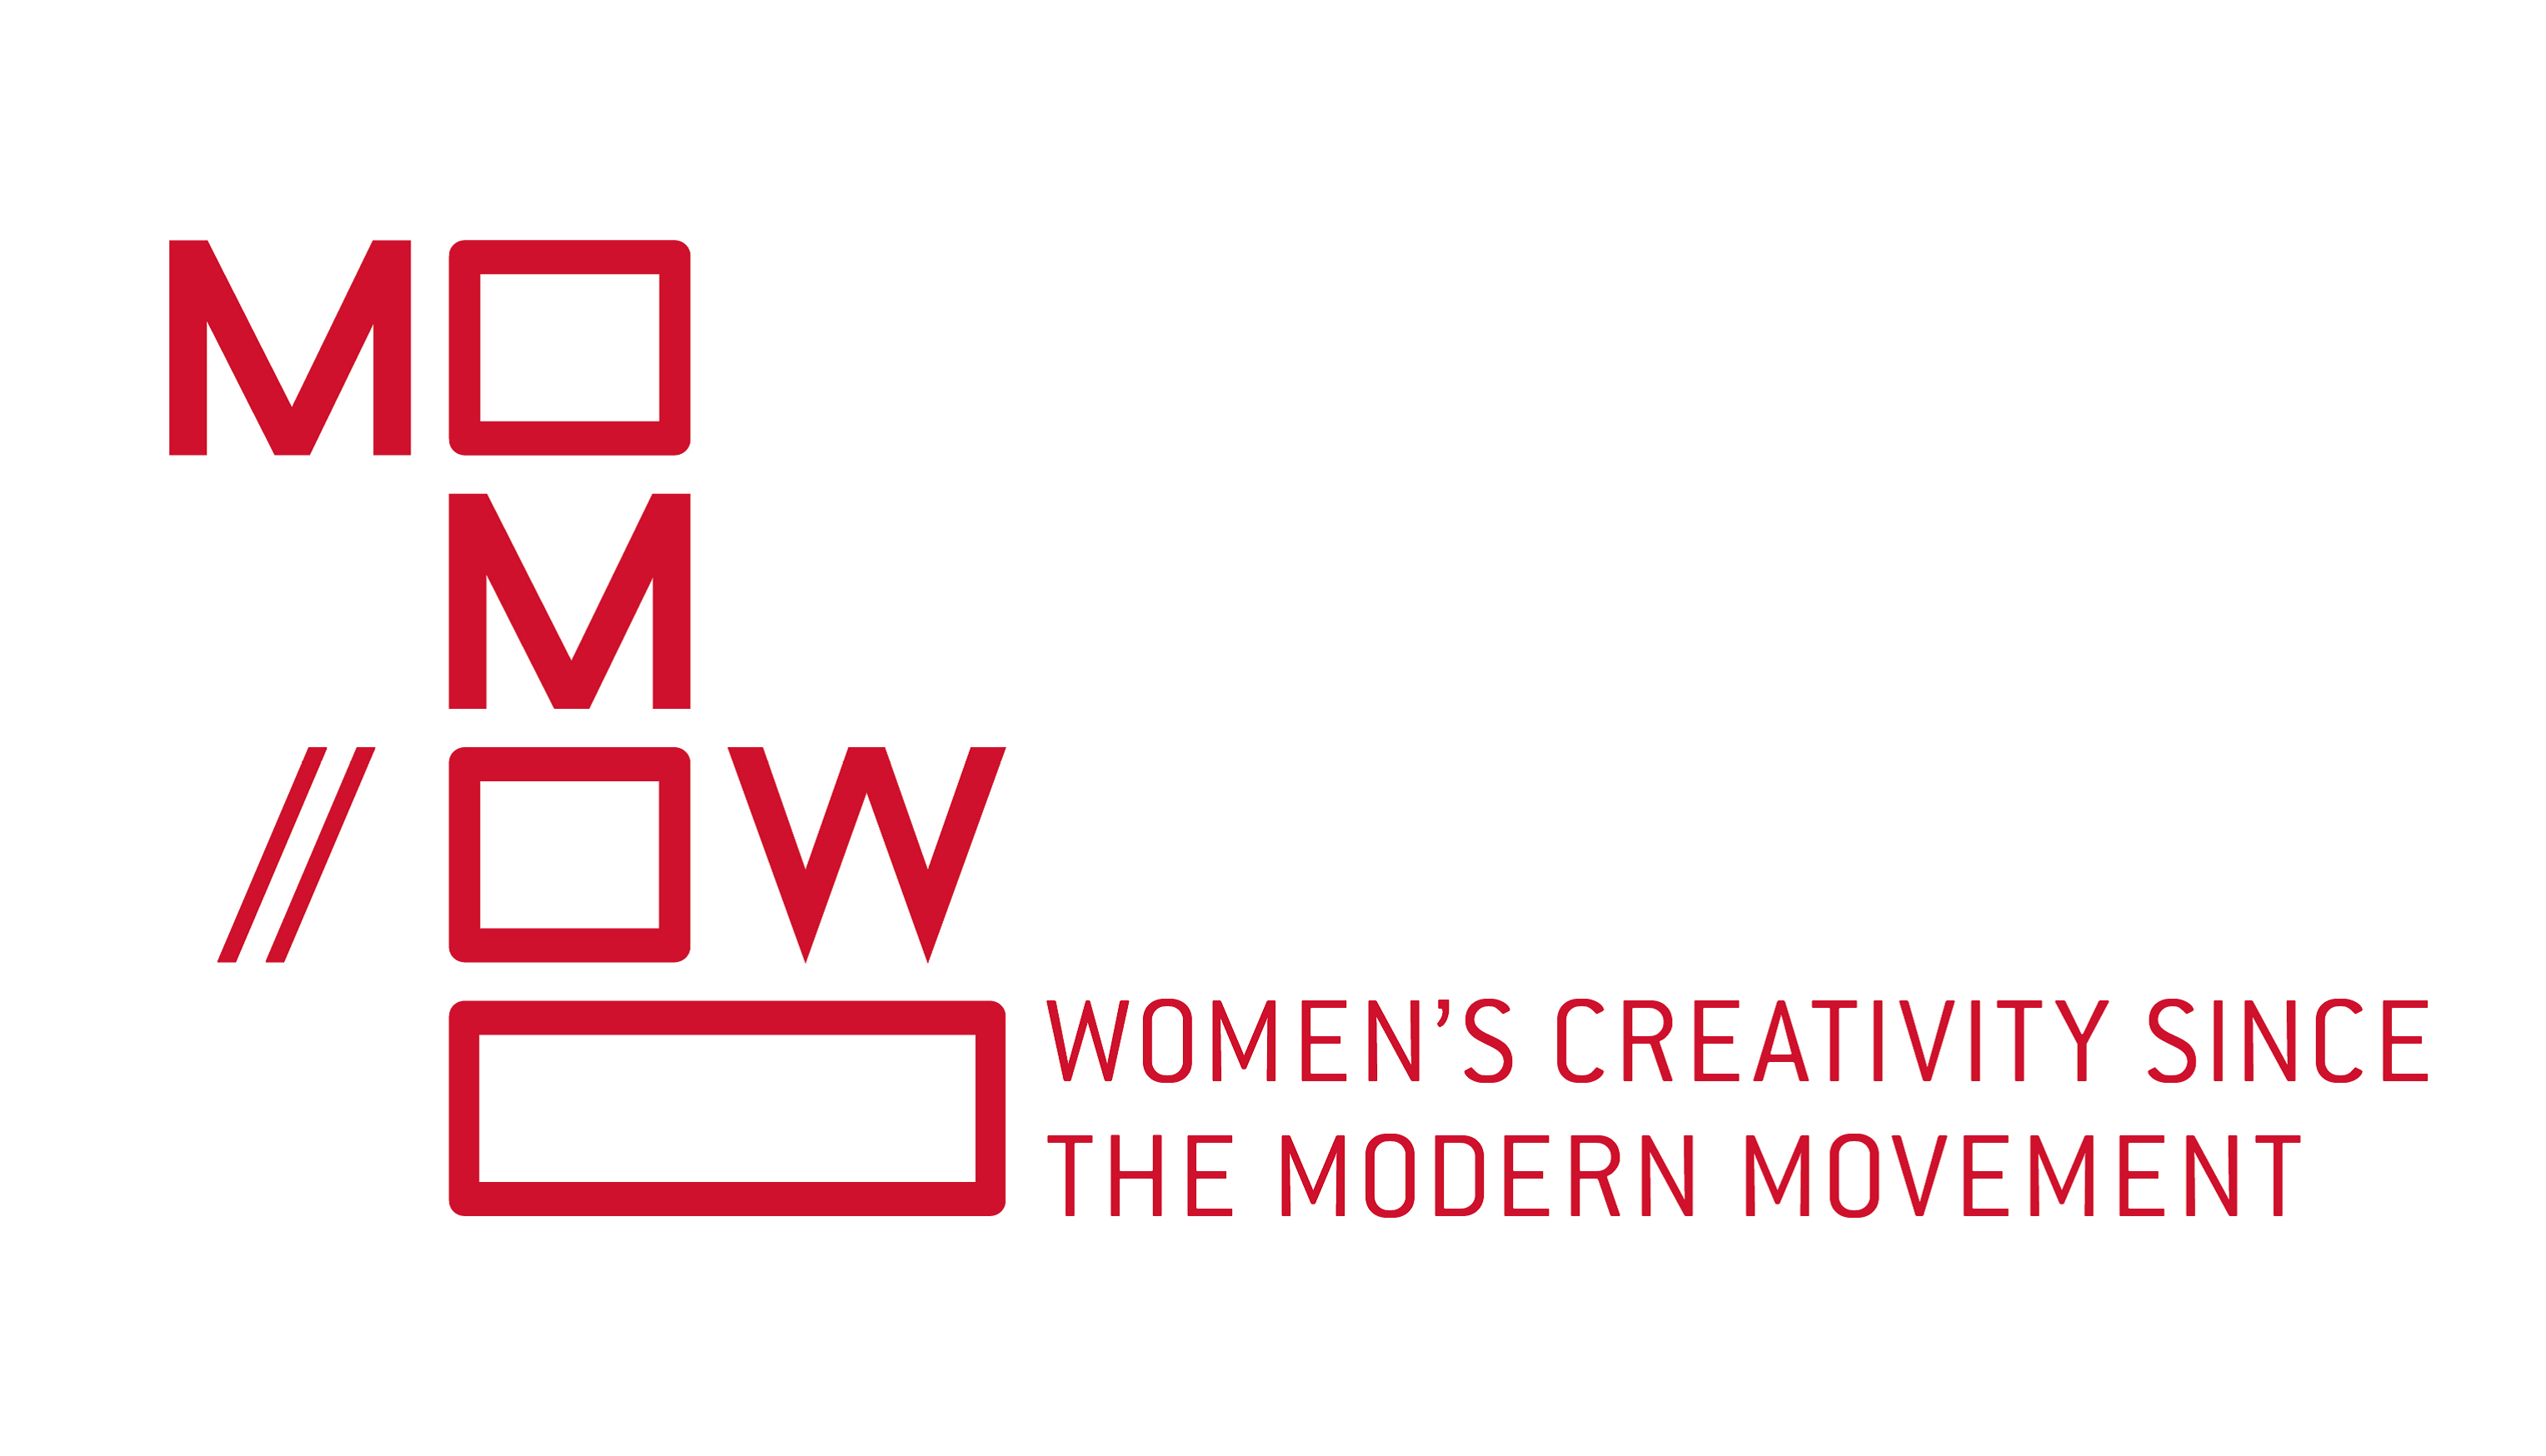 Women’s creativity since the Modern Movement